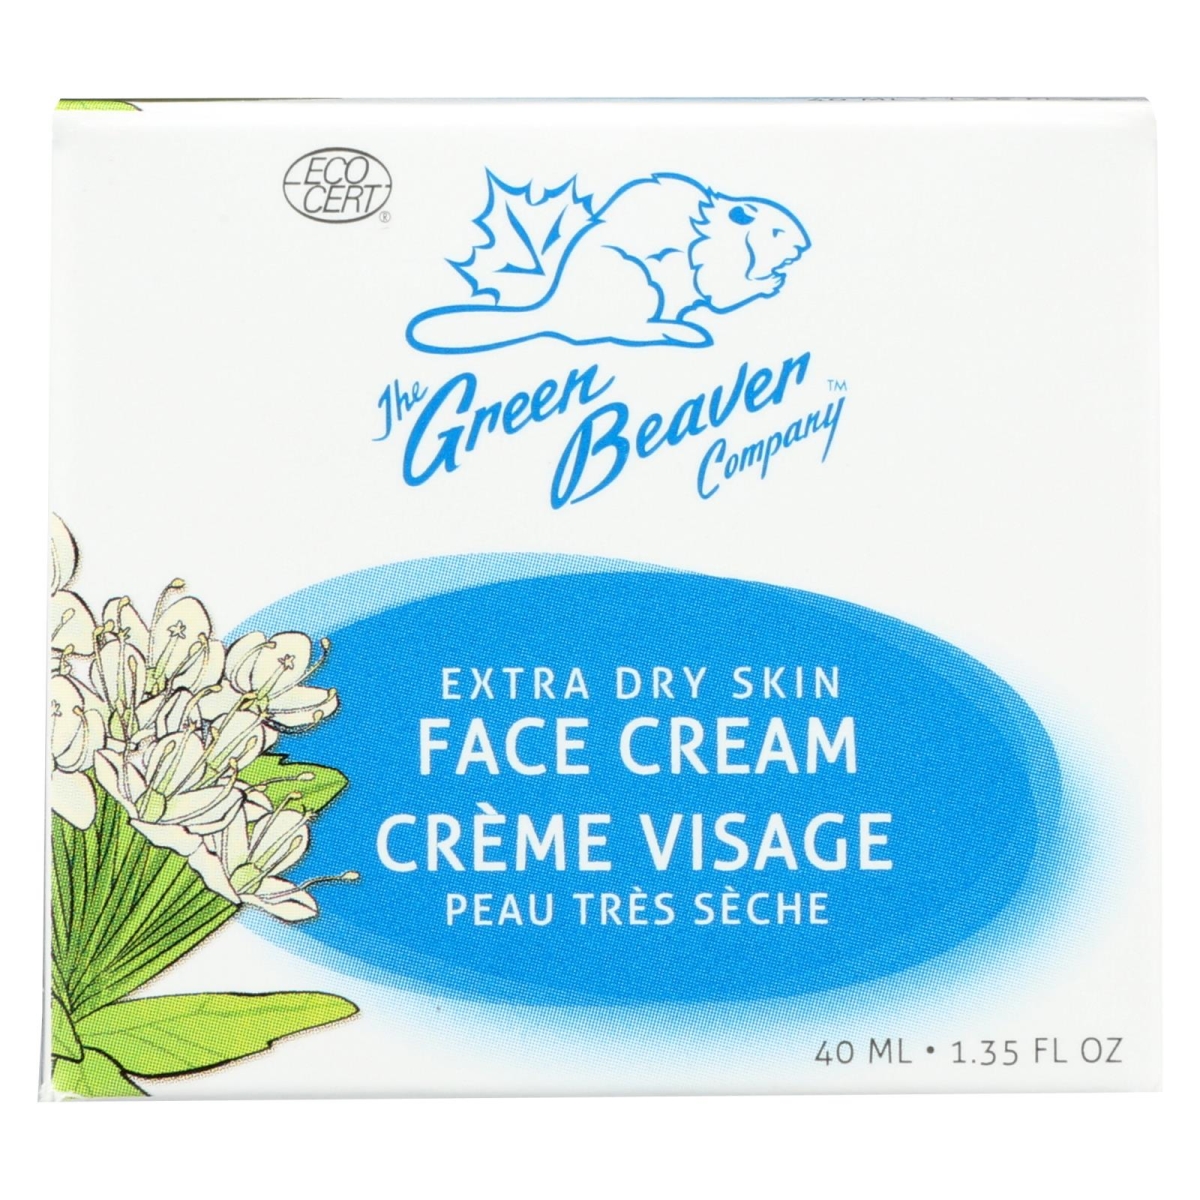 2196871 1.35 Fl Oz Extra Dry Skin Face Cream